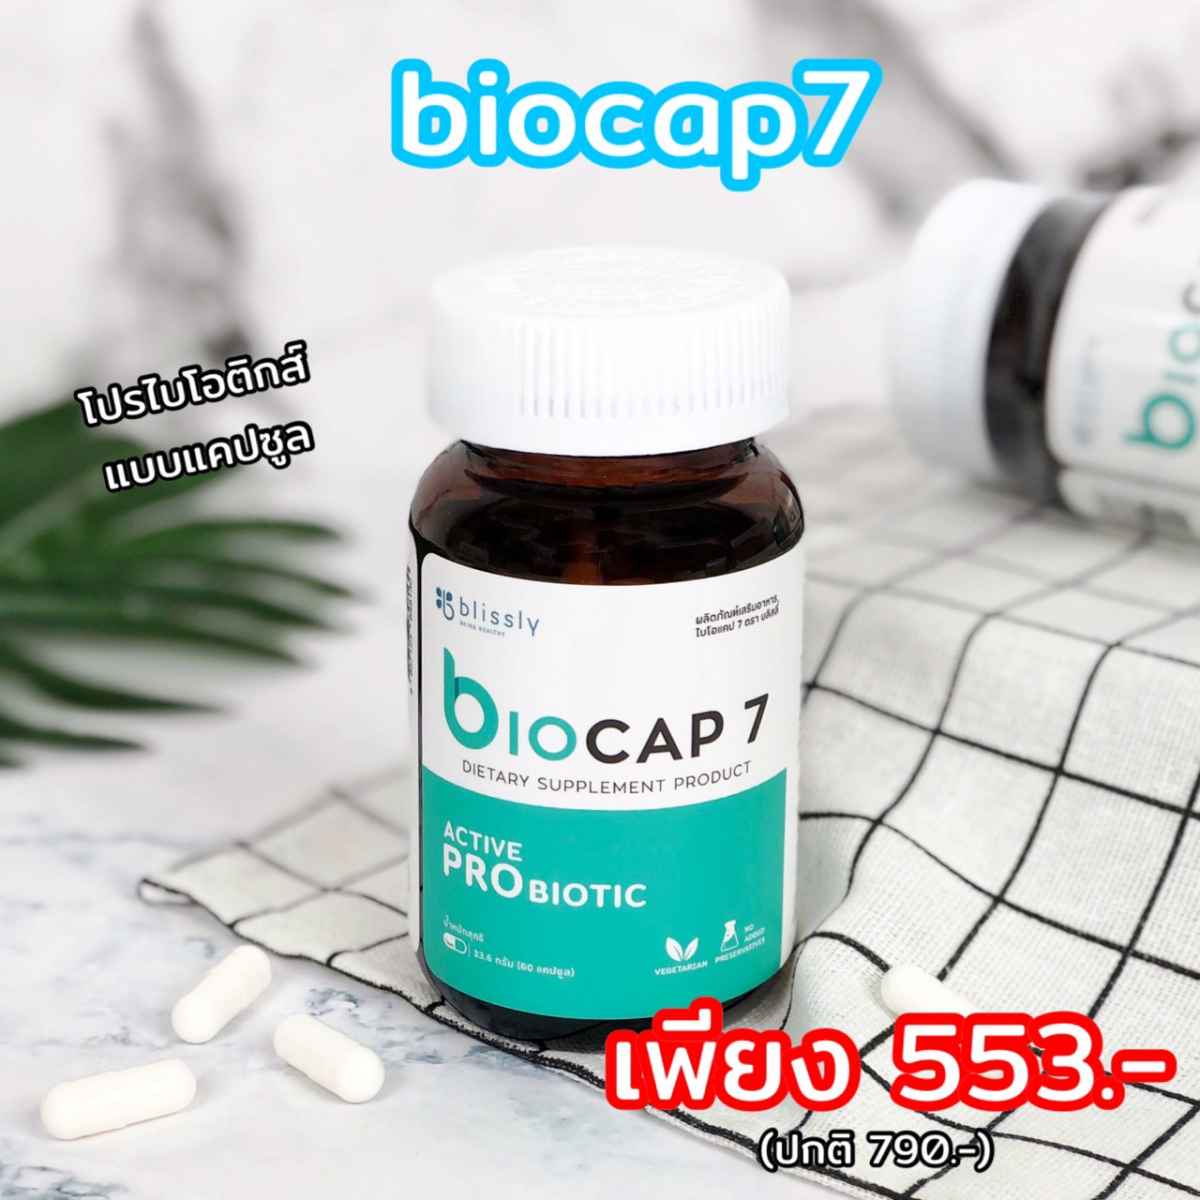 biocap7